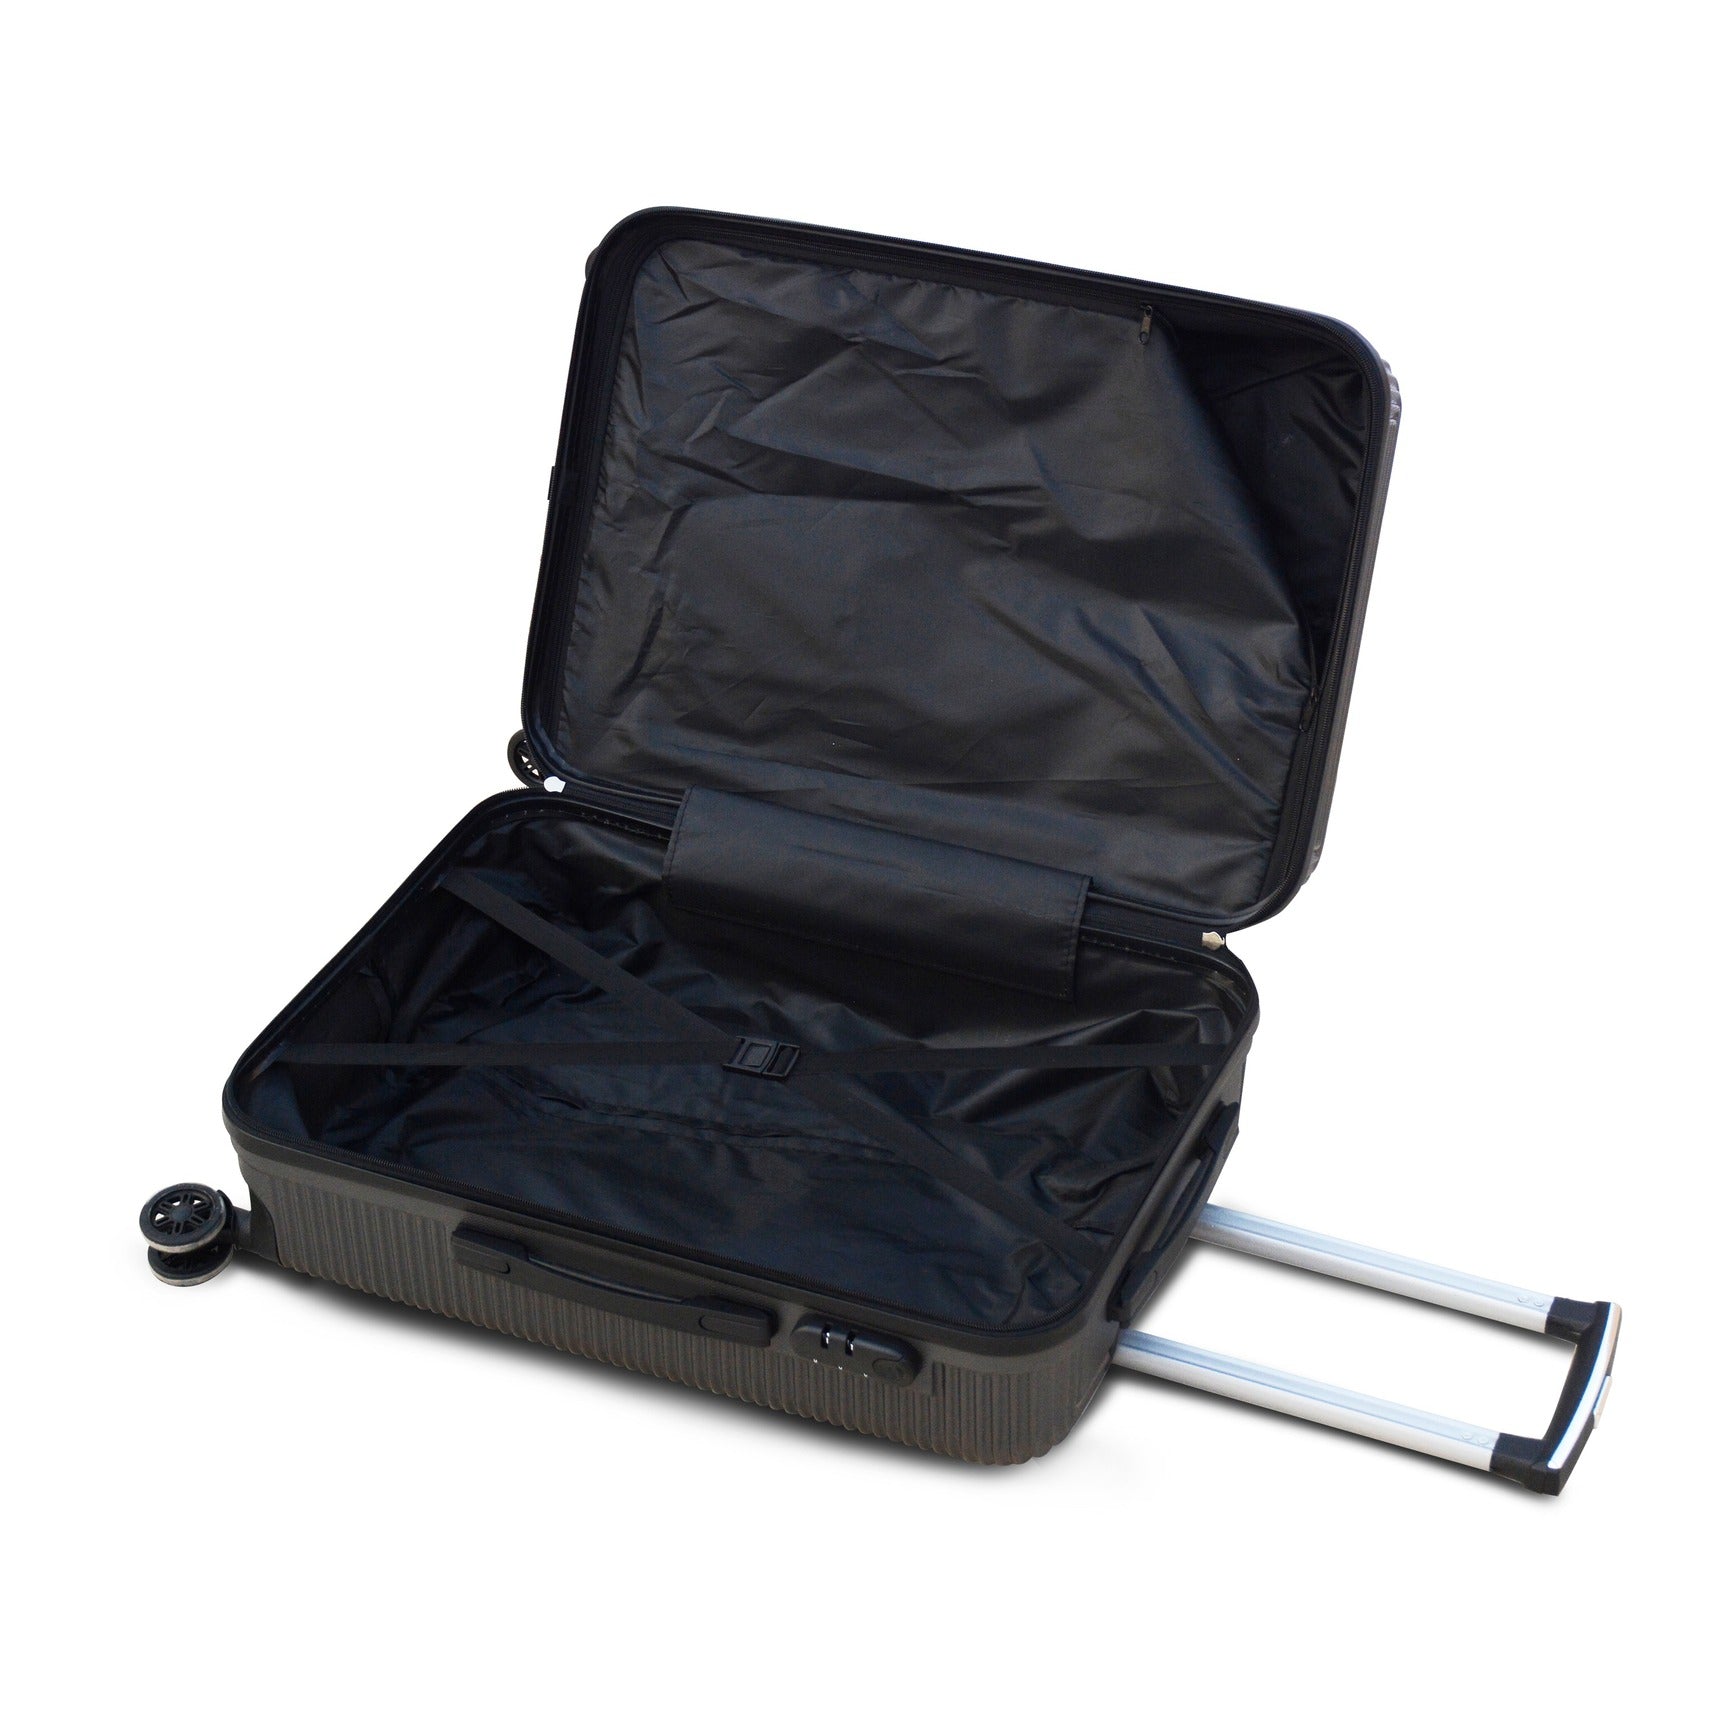 24" Dark Grey Colour JIAN ABS Line Luggage Lightweight Hard Case Trolley Bag With Spinner Wheel Zaappy.com